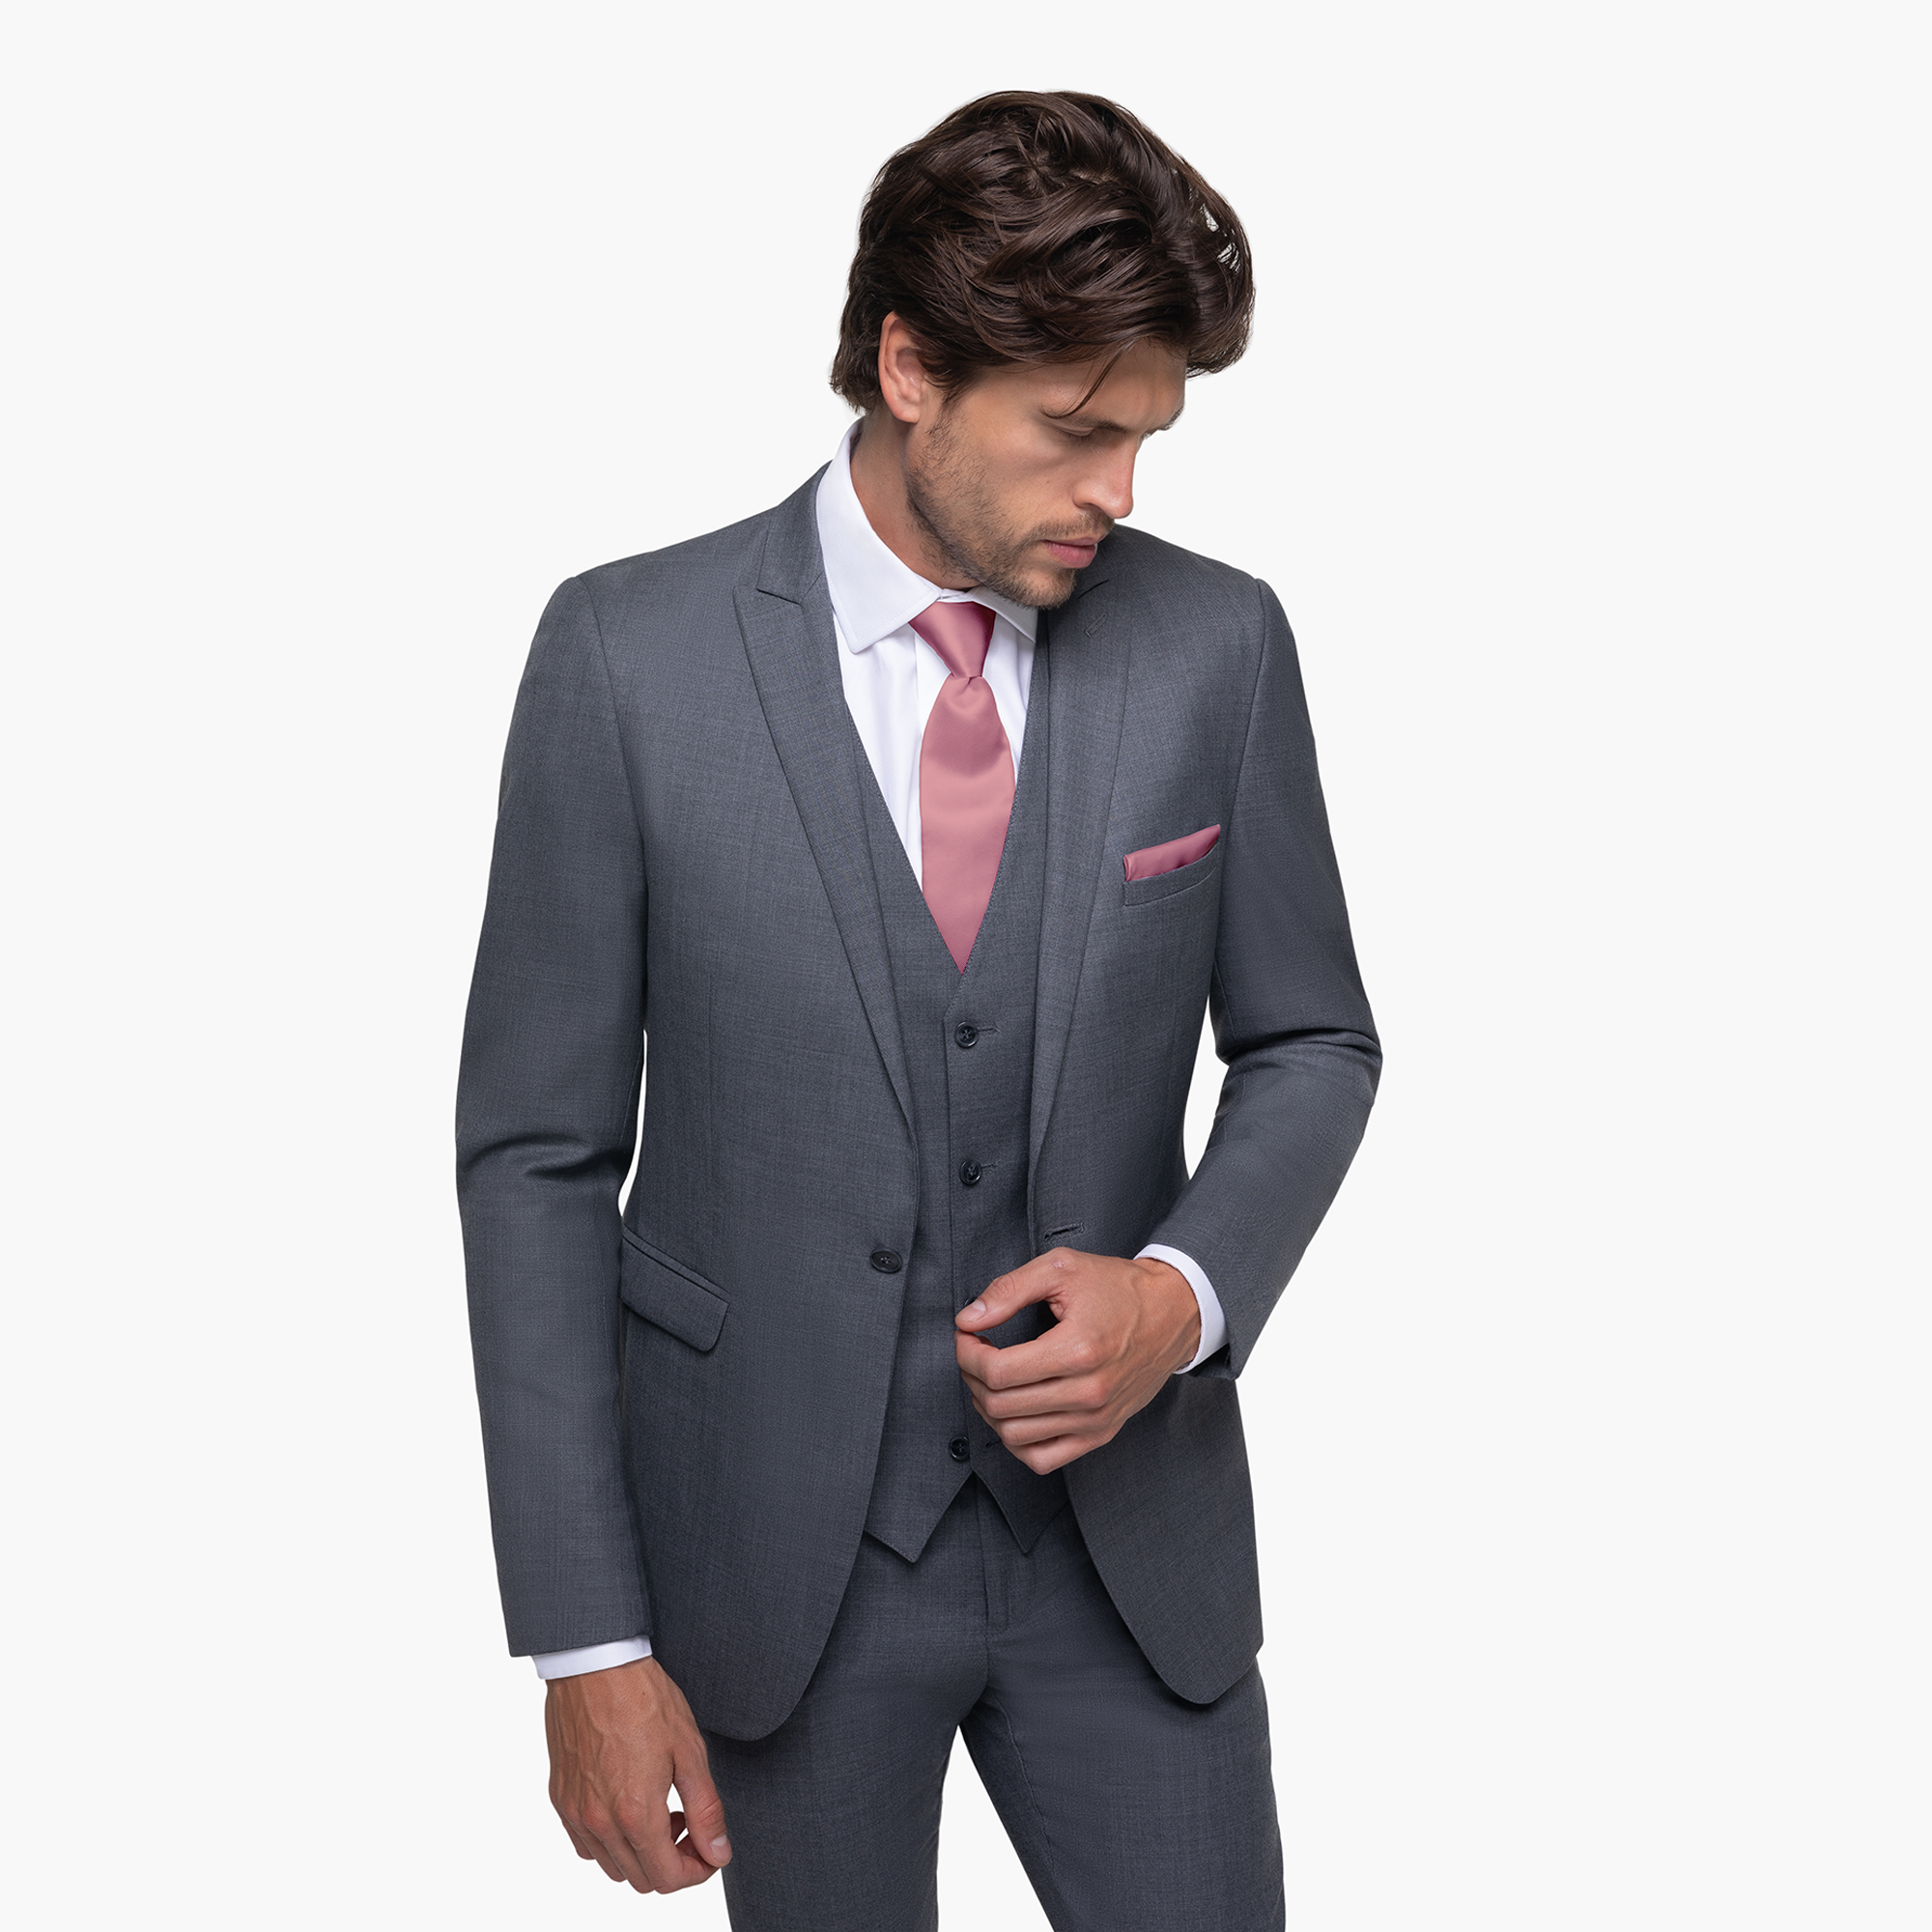 Iron Gray Peak Lapel Suit on a male model